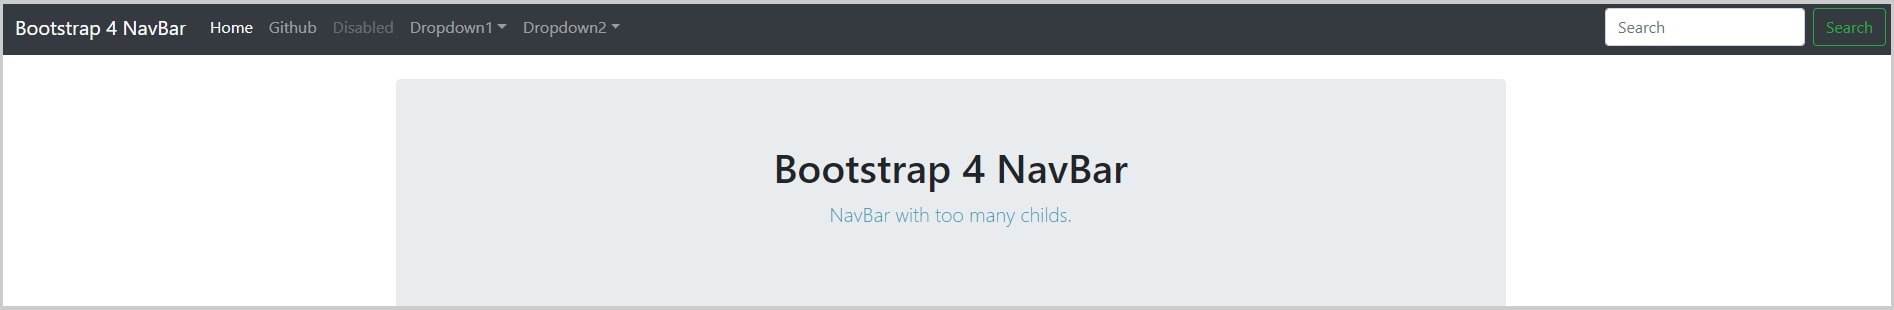 30-best-bootstrap-navbar-template-in-2020-seo-website-build-tips